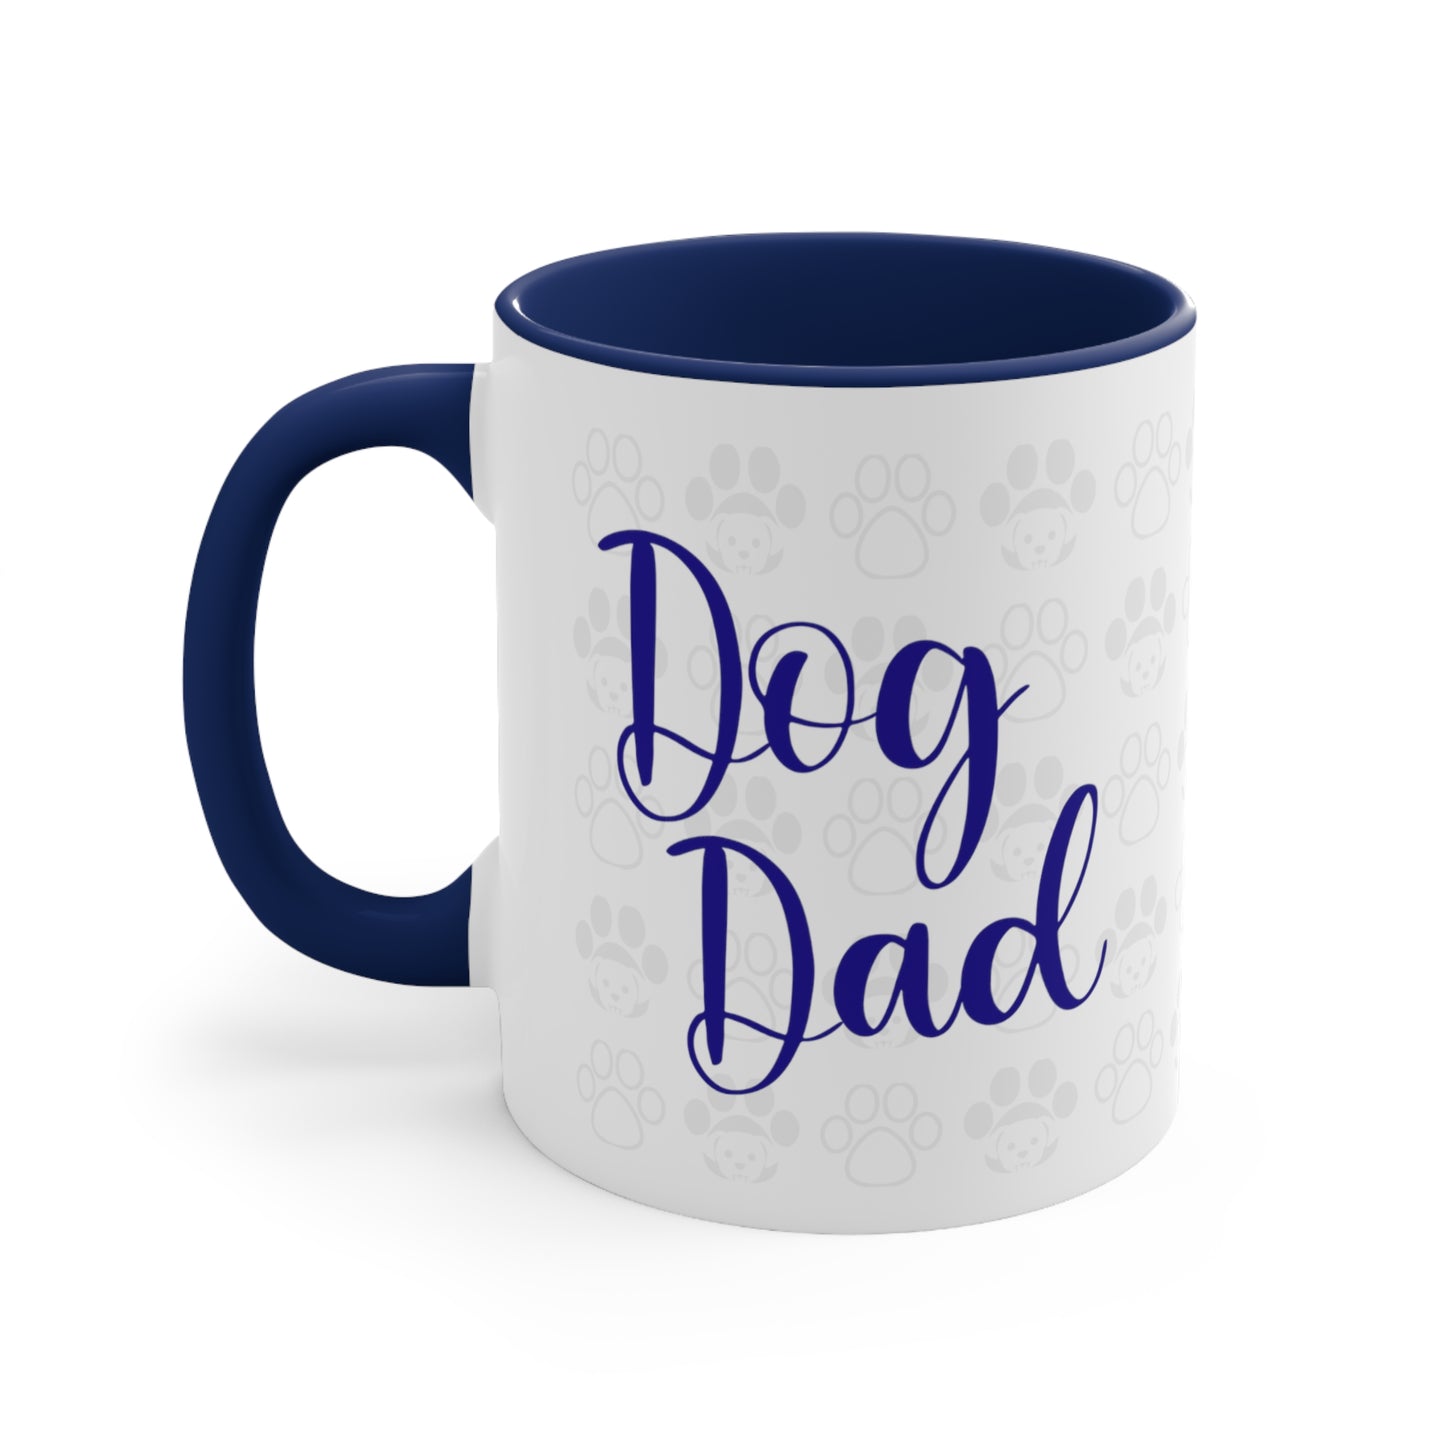 Dog Dad coffee Mug 11 oz, front view in dark blue.